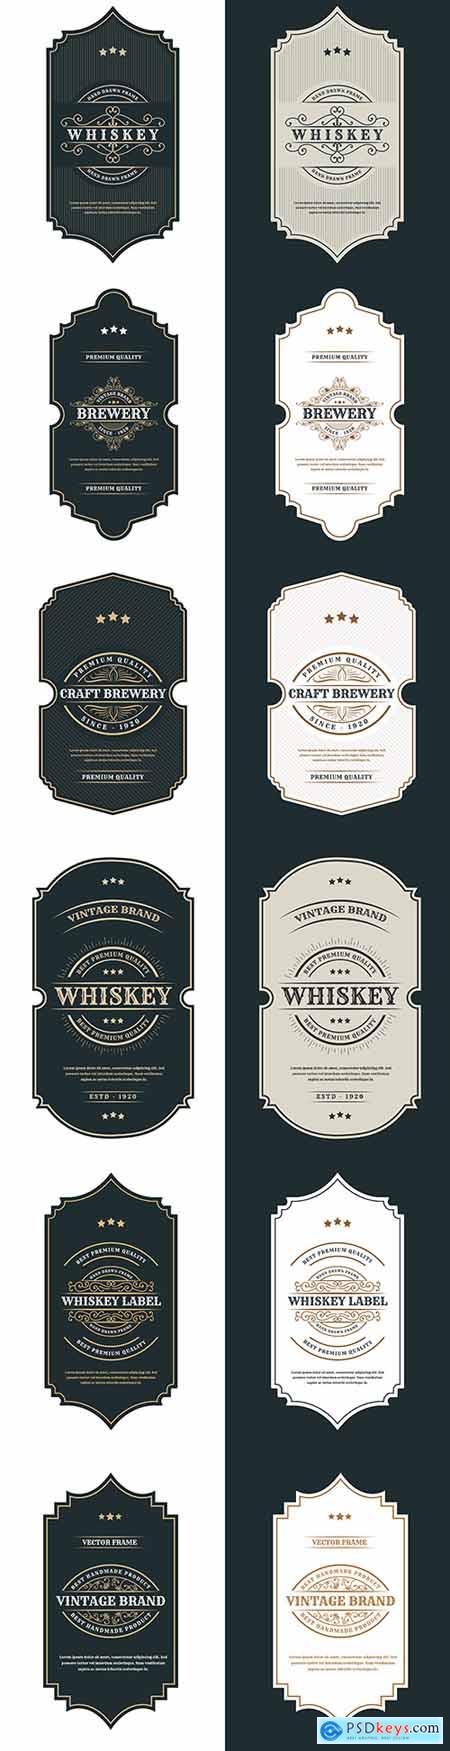 Whiskey vintage brand design label for alcohol